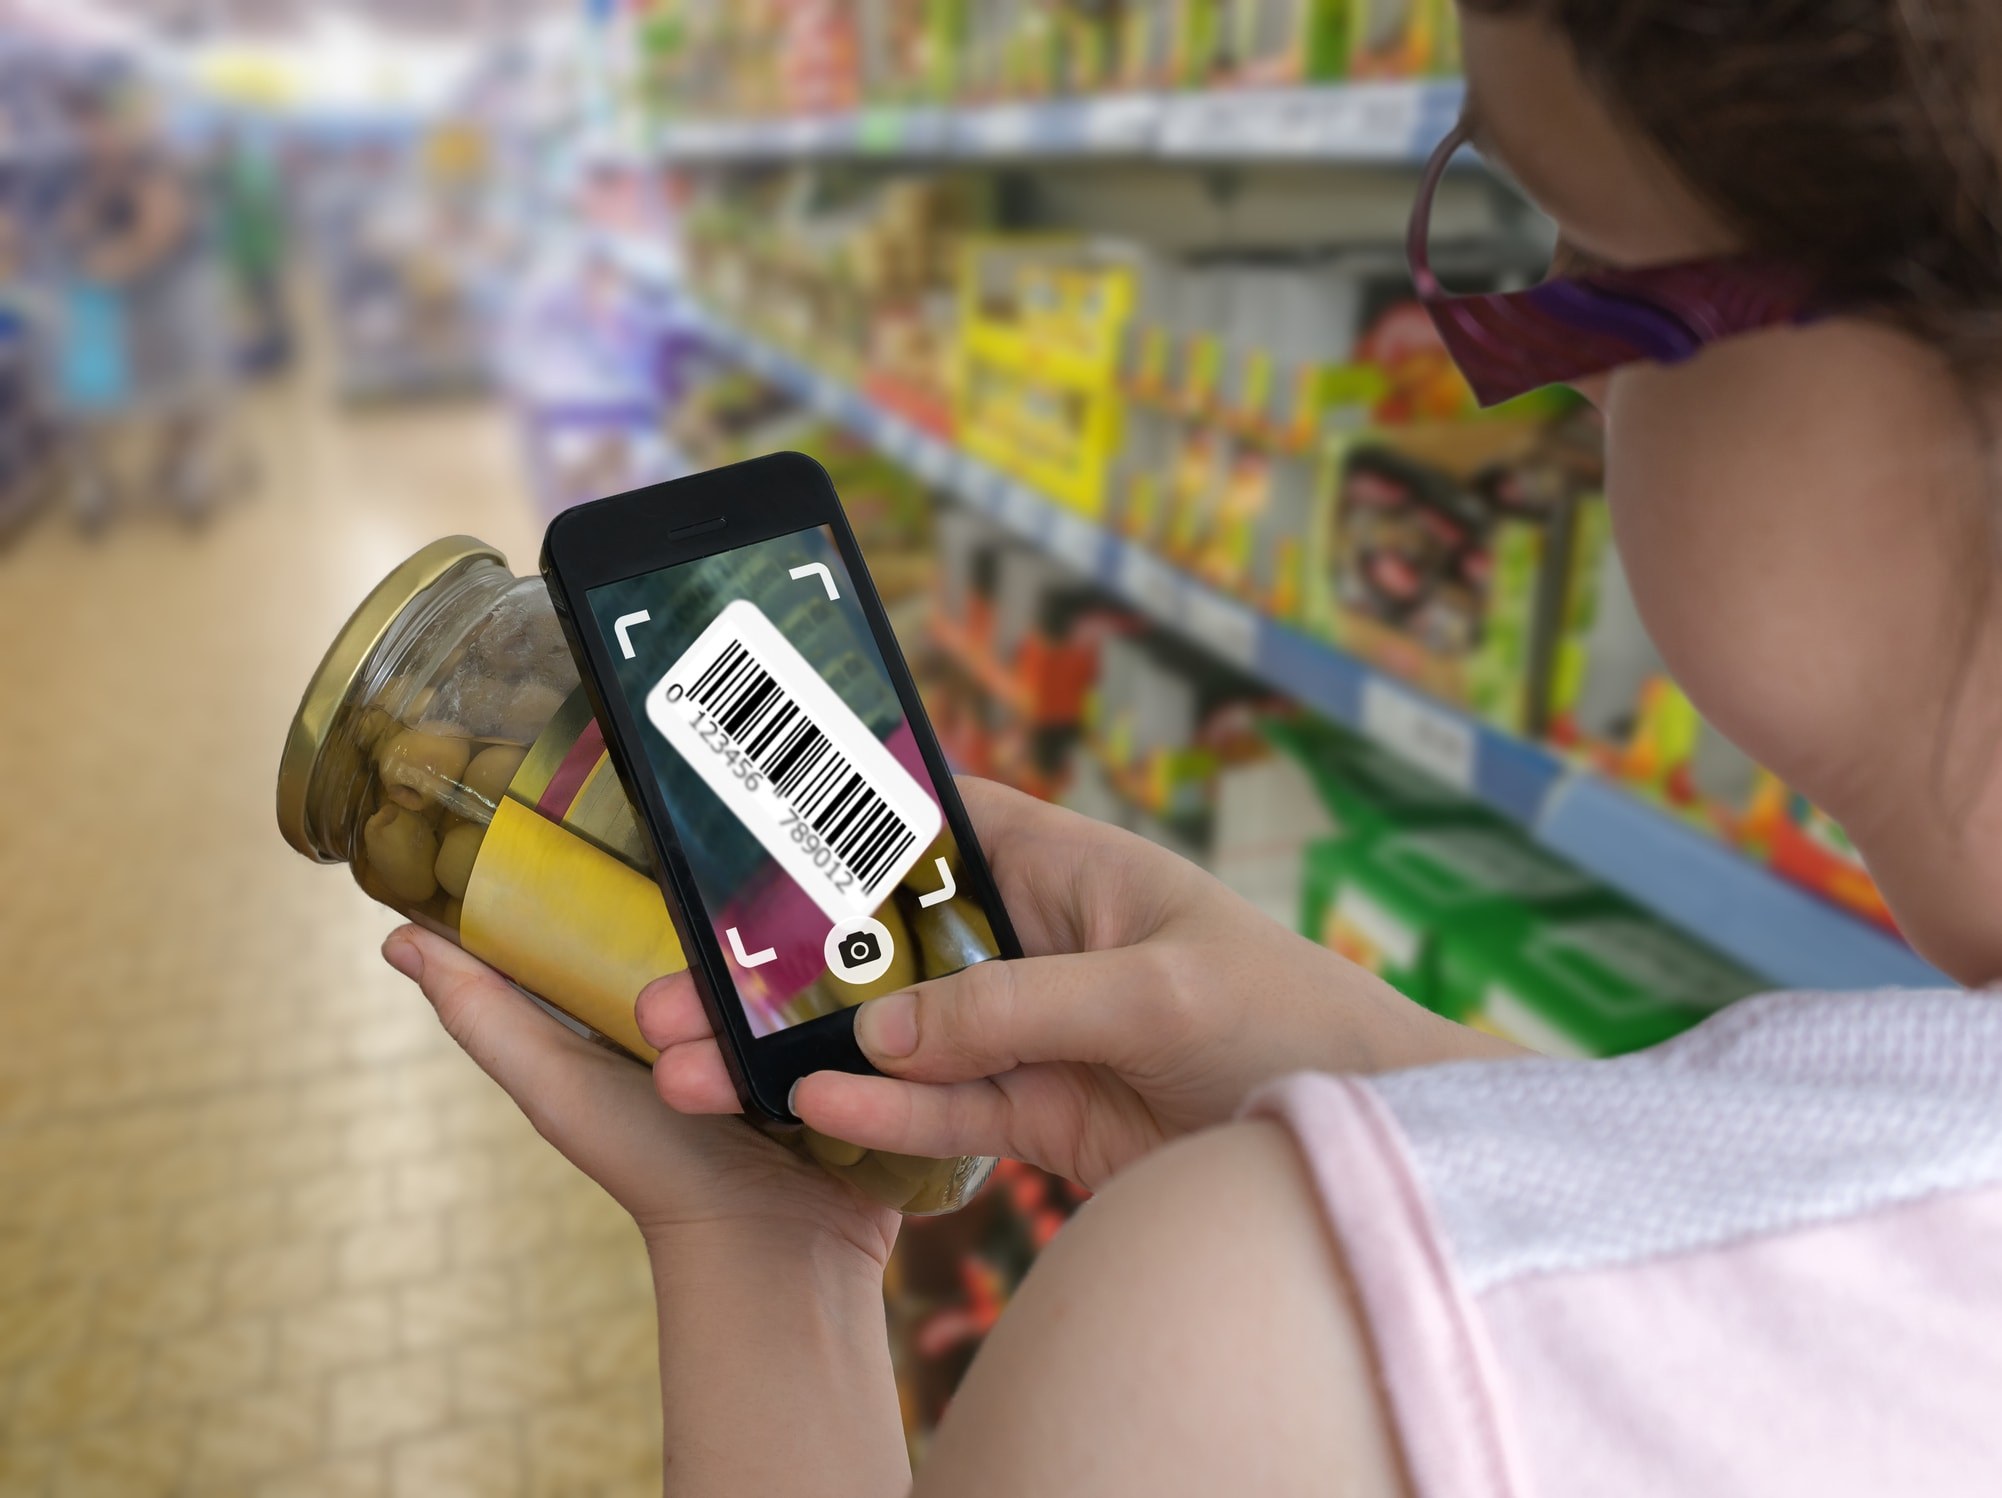 Scanning barcode smart label on phone added vaue